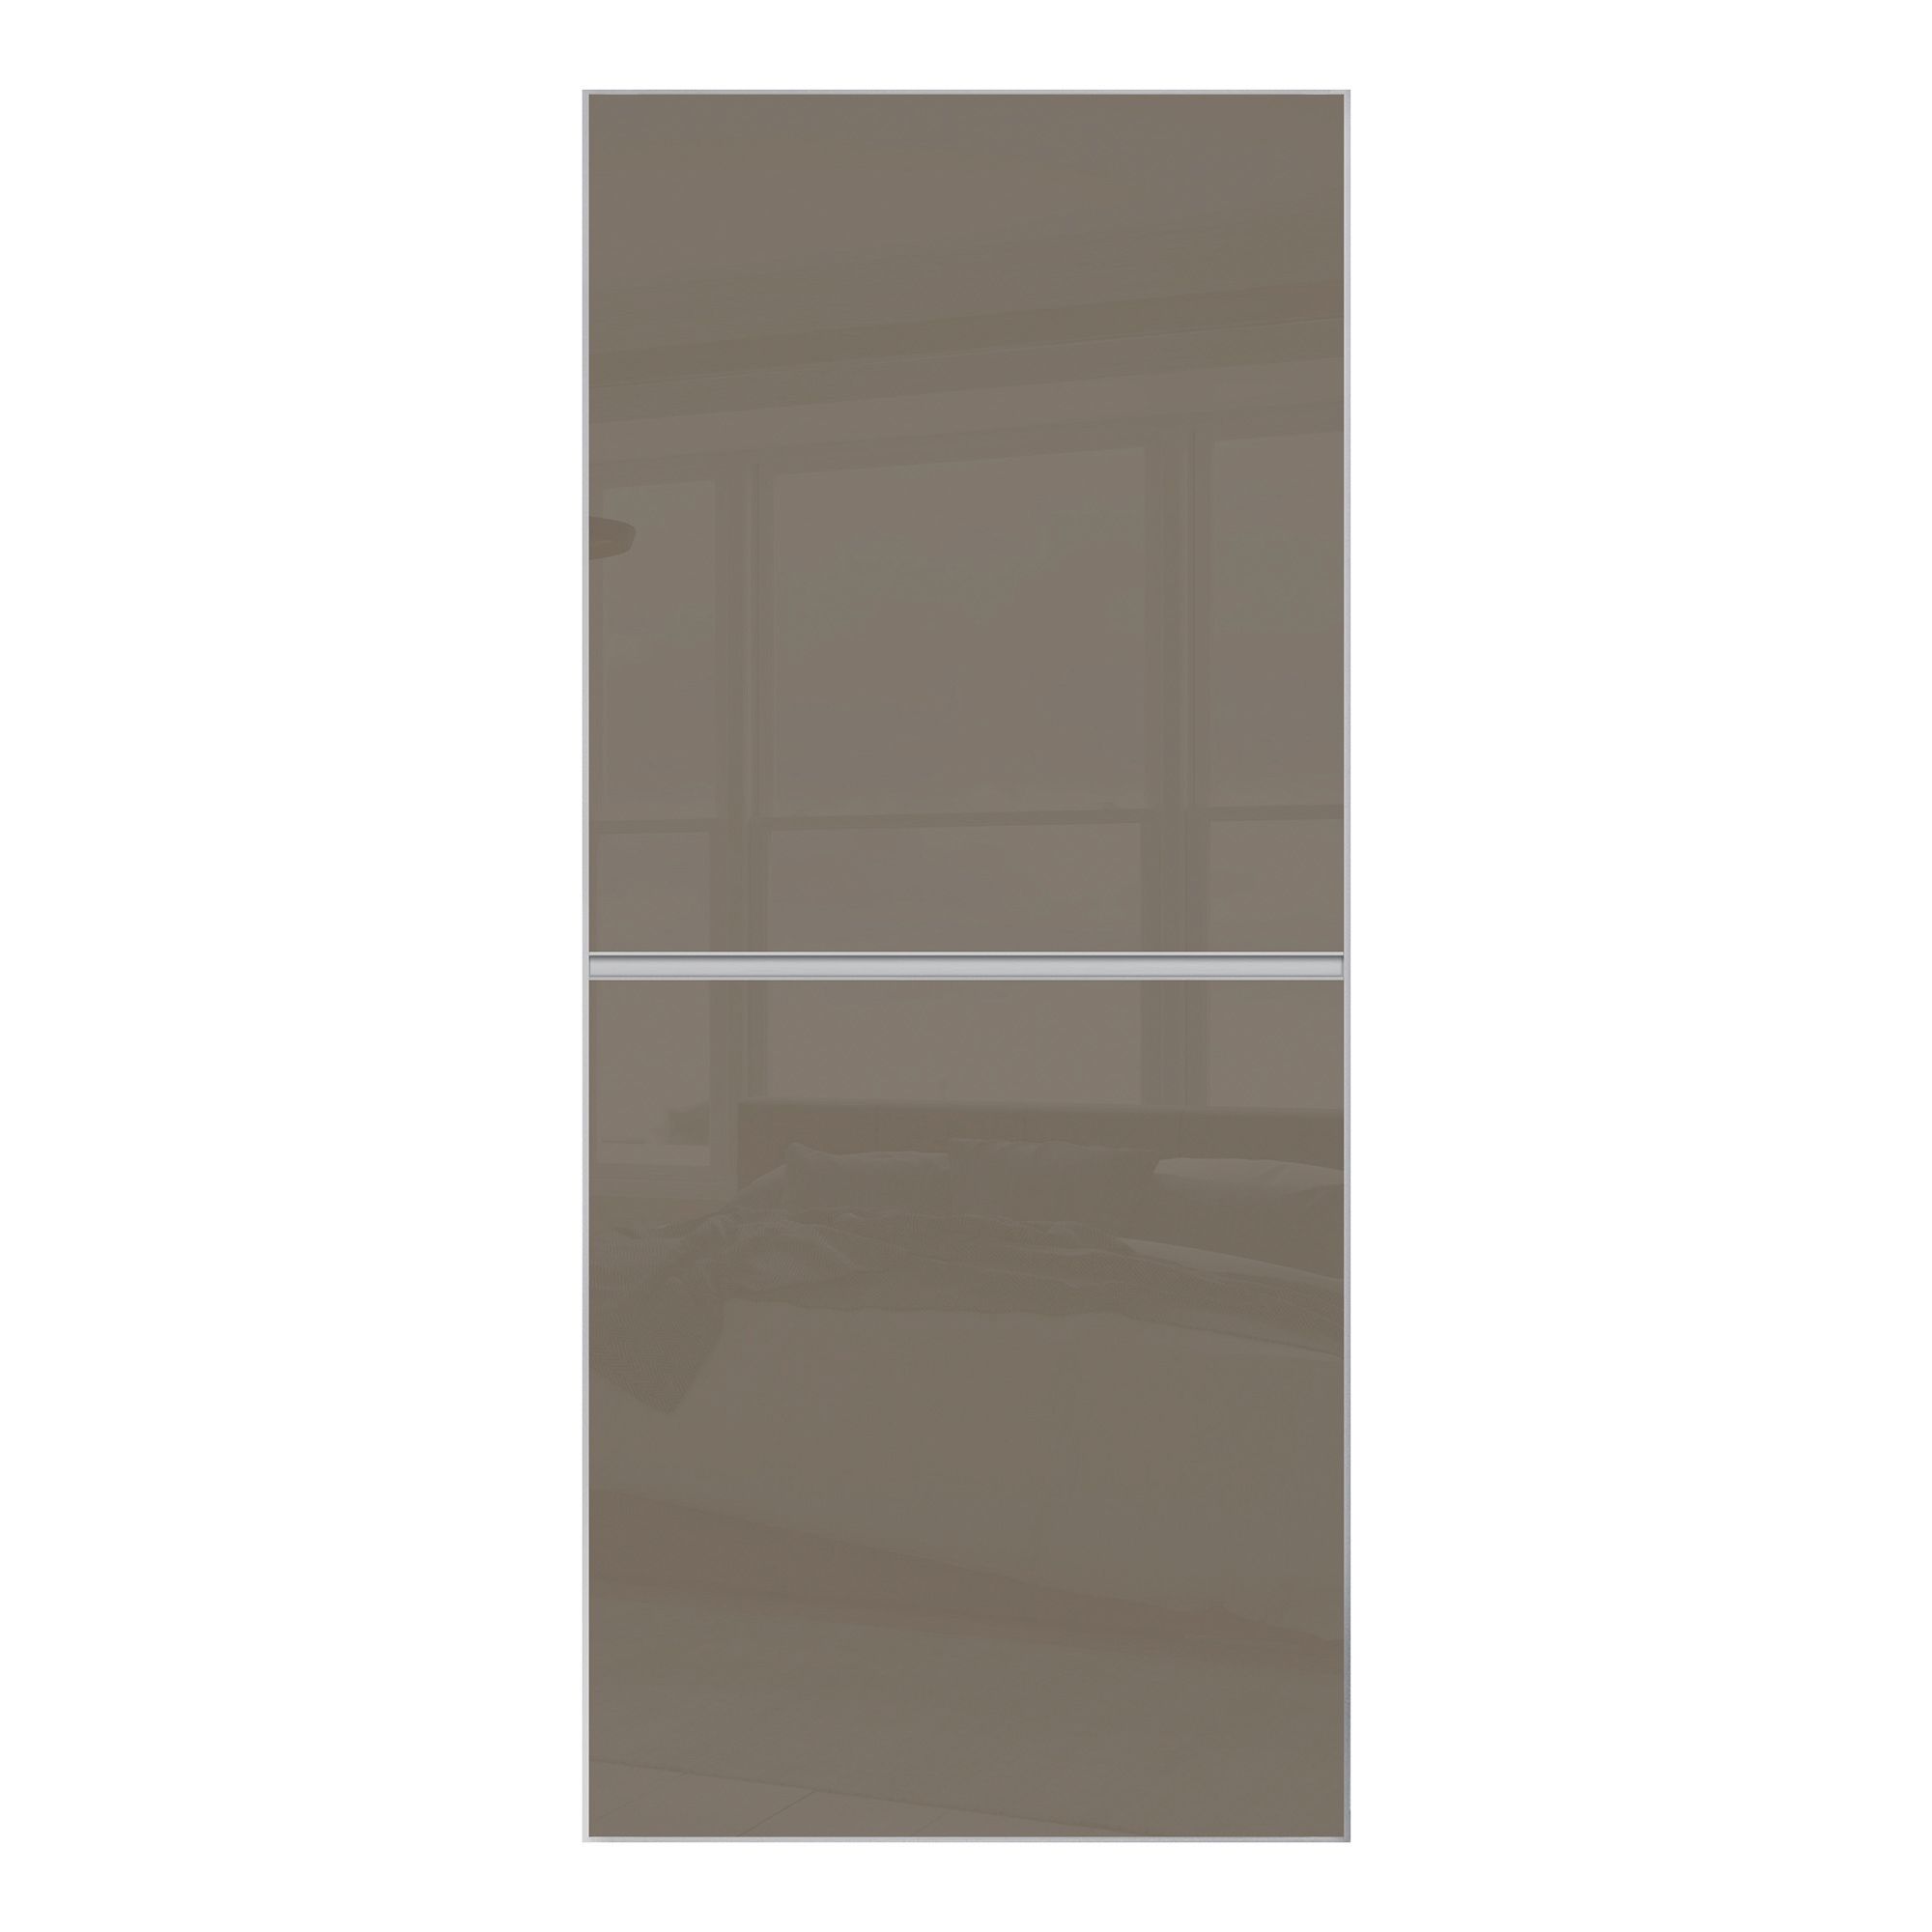 Image of Spacepro Minimalist Sliding Wardrobe Door 2 Panel Silver Frame Cappuccino - 914mm